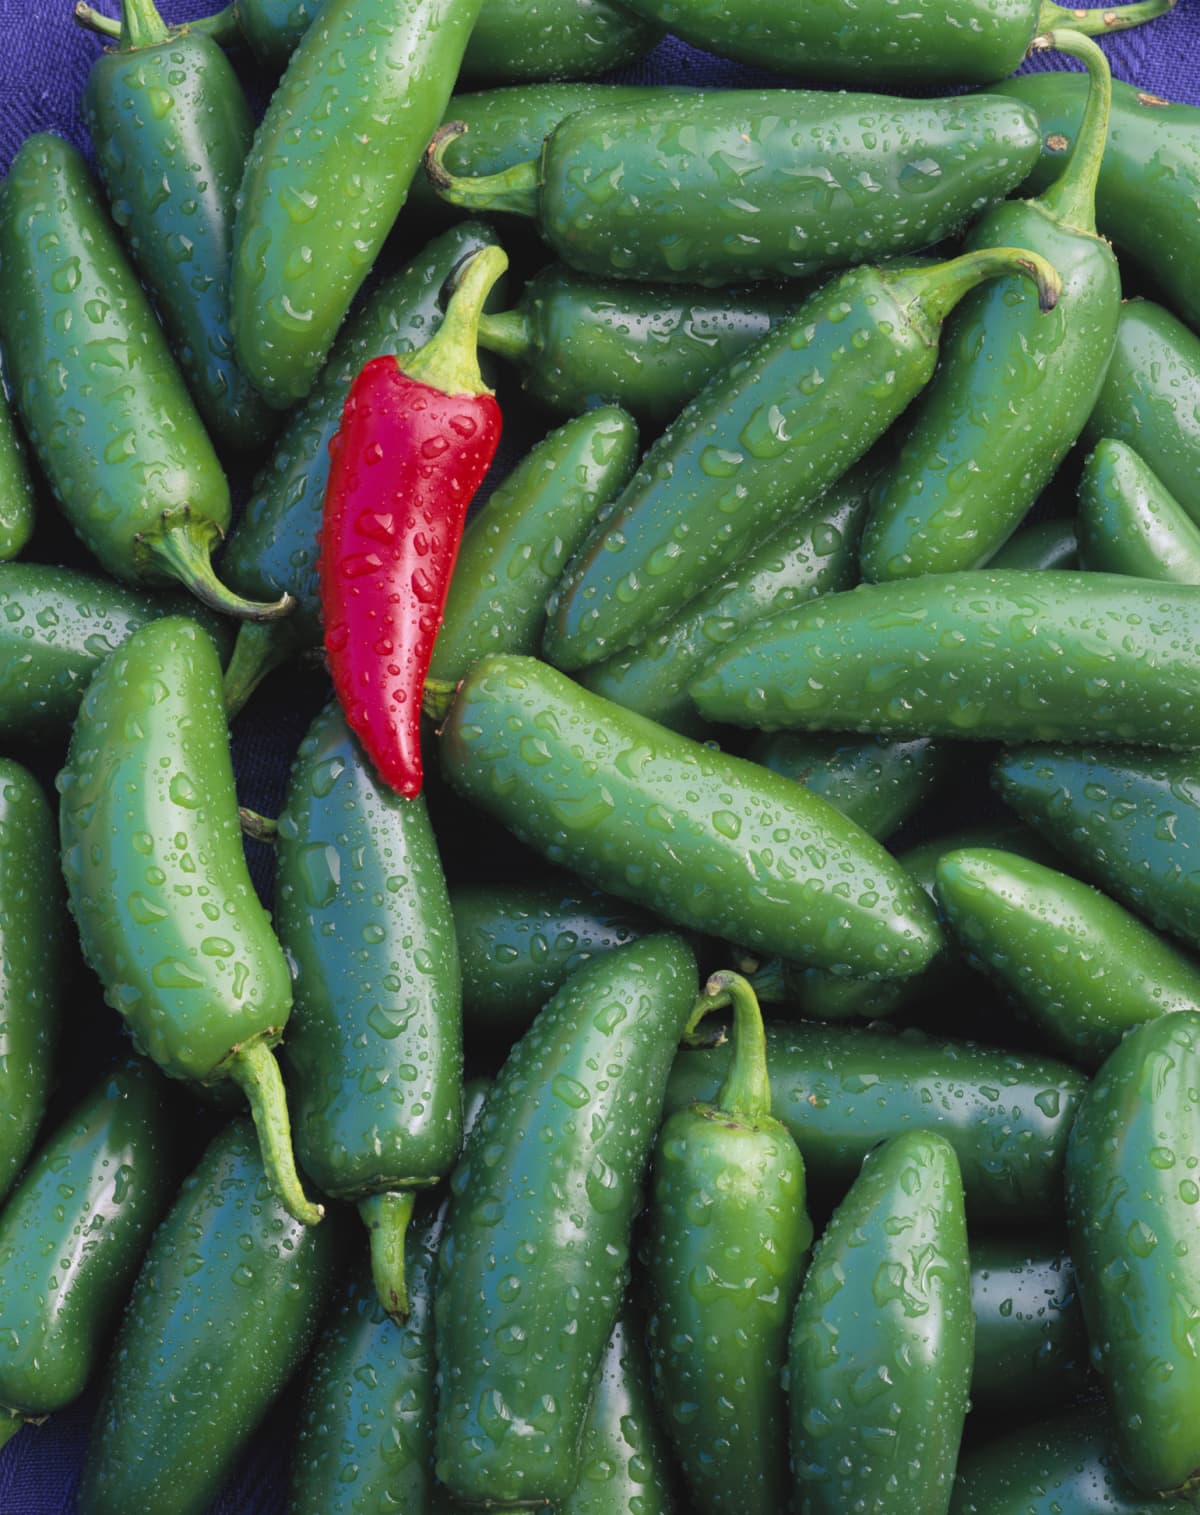 Single red jalapeño on pile of green jalapeño peppers